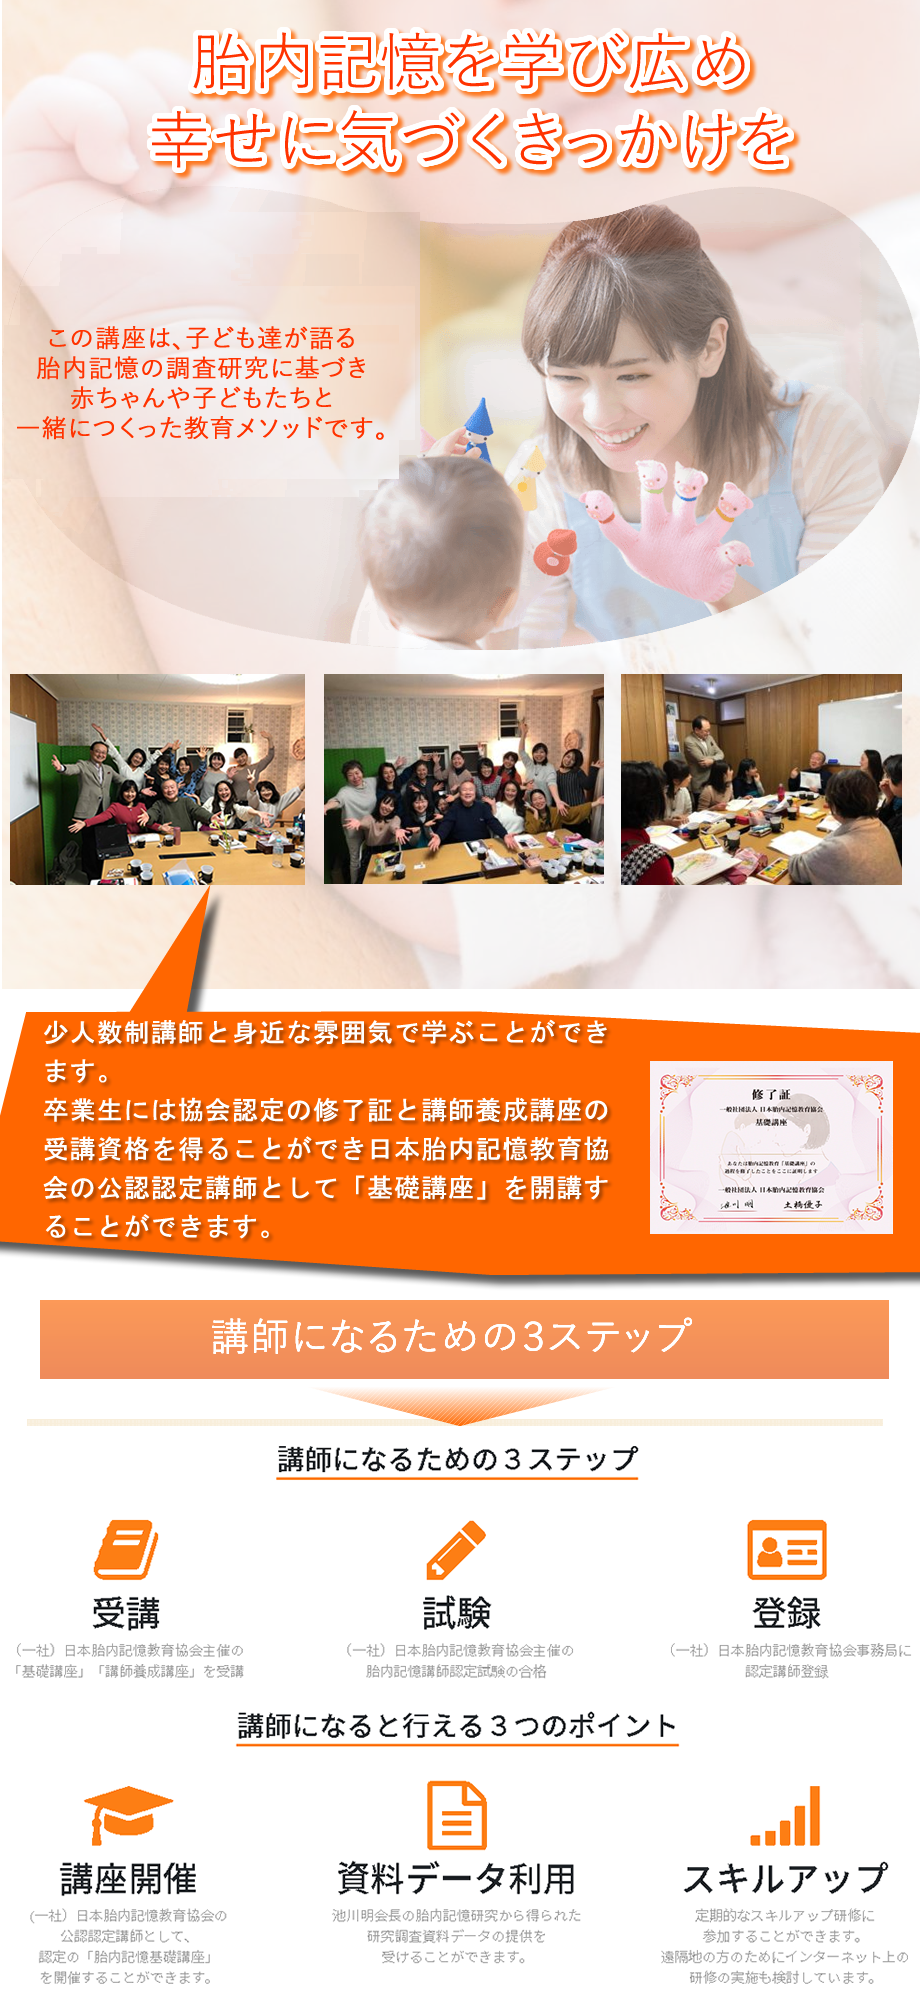 tainaikiokulp1 - 日本胎内記憶教育教会基礎講座、現在４期生を募集中です。